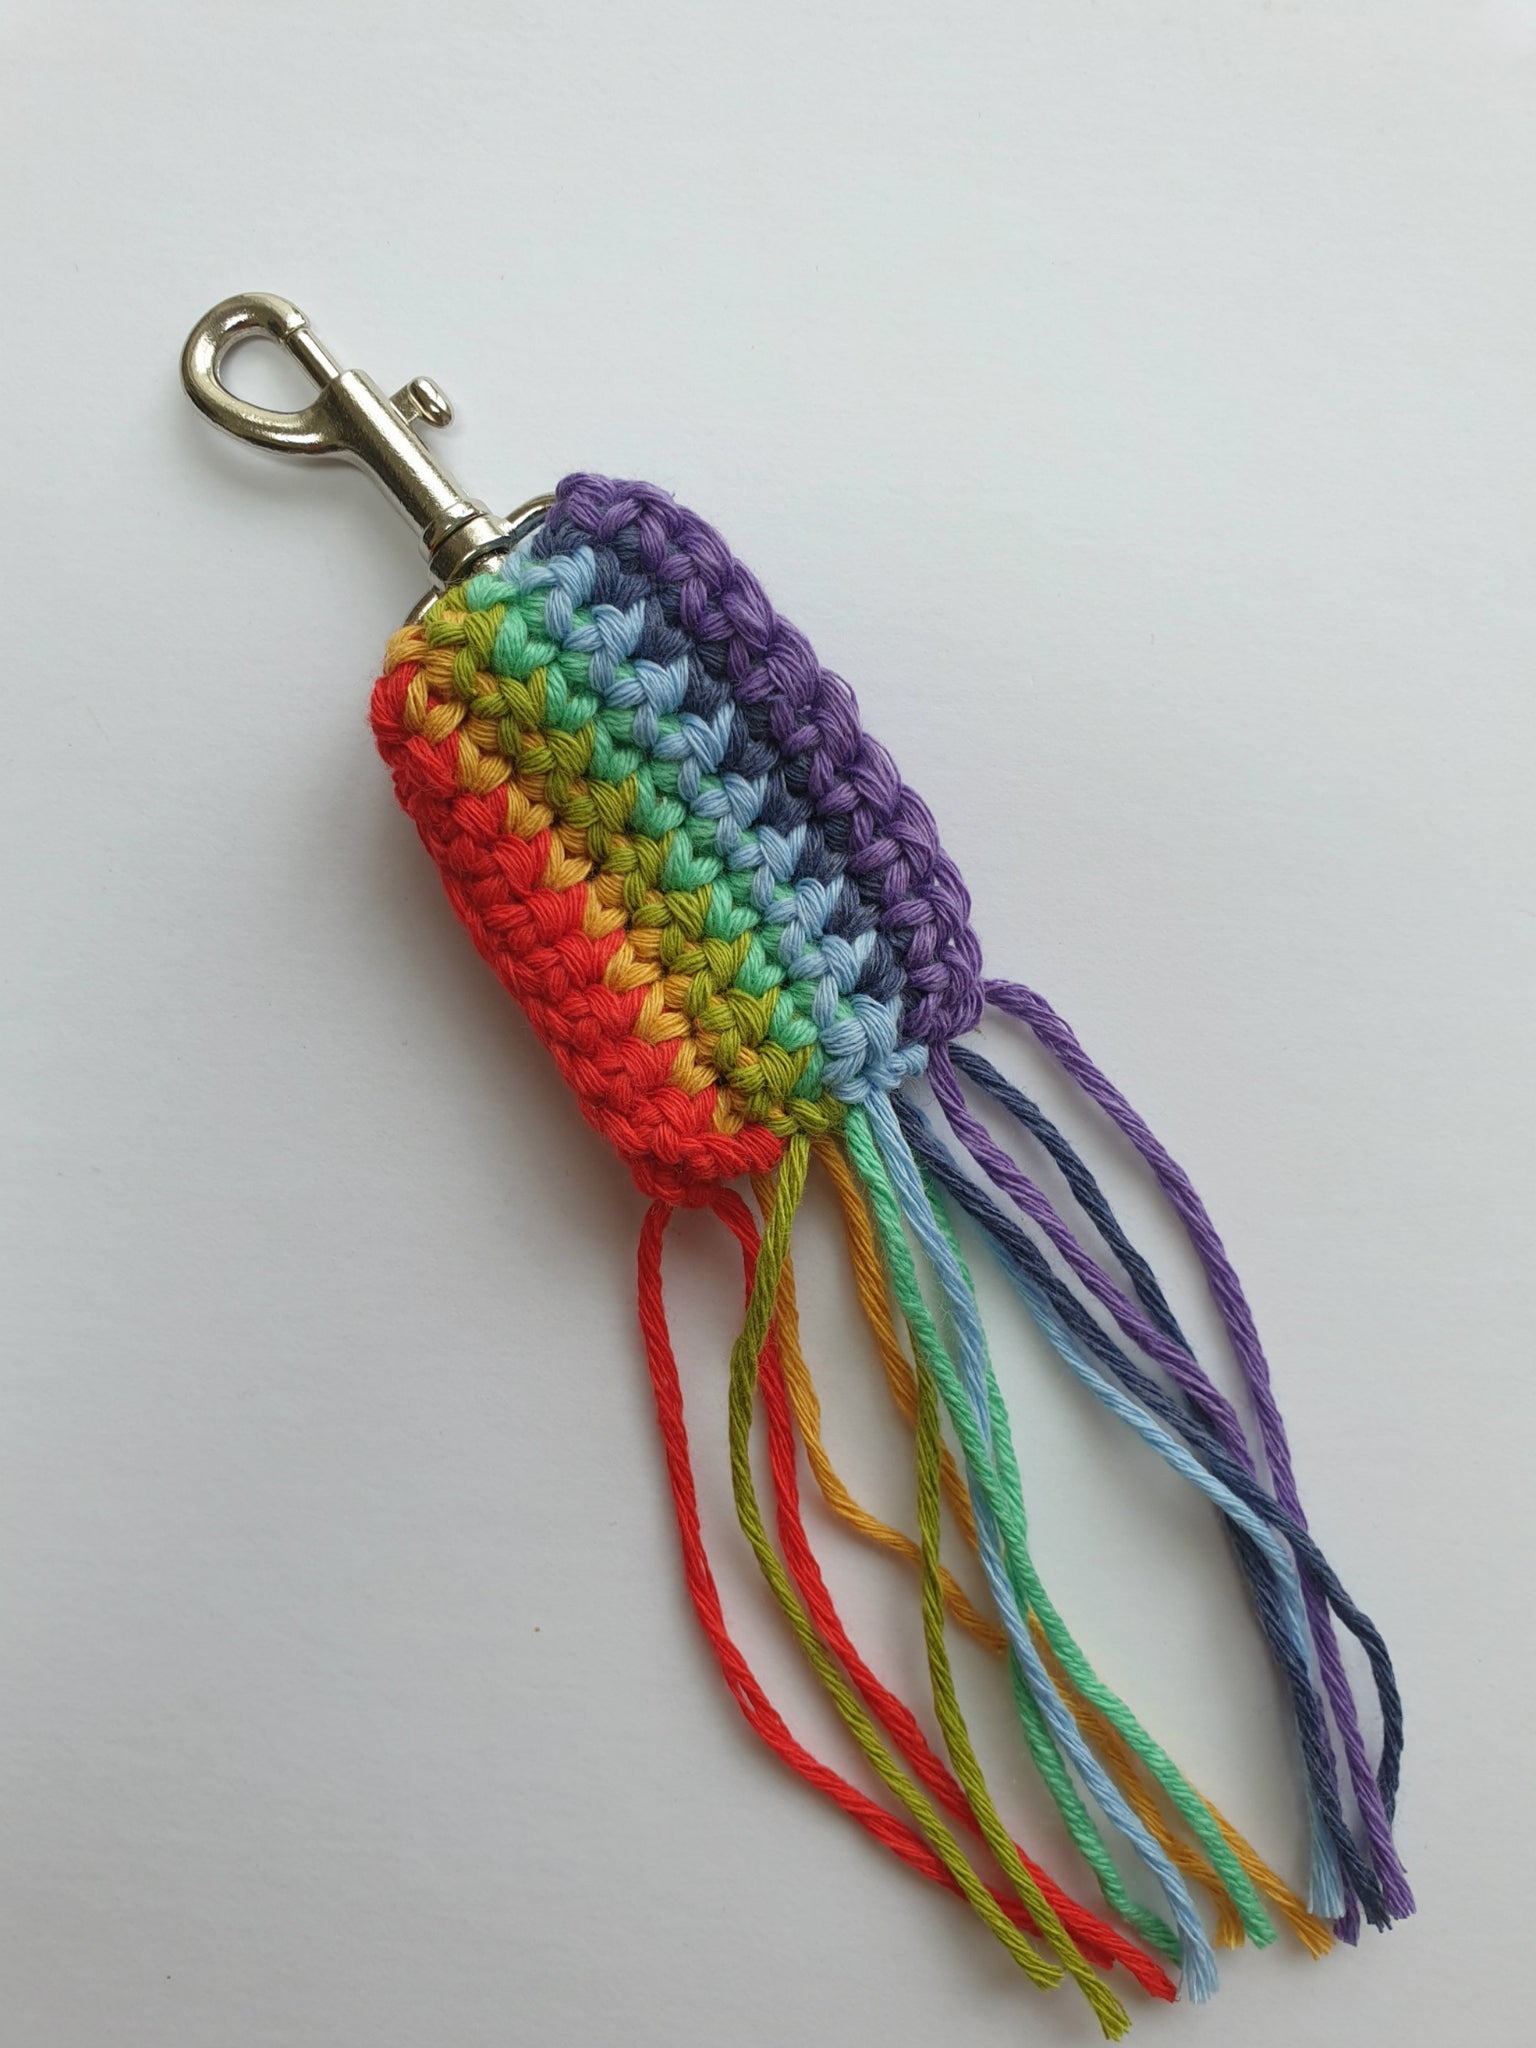 Rainbow keyring crochet kit by One Creative Cat. Easy pattern